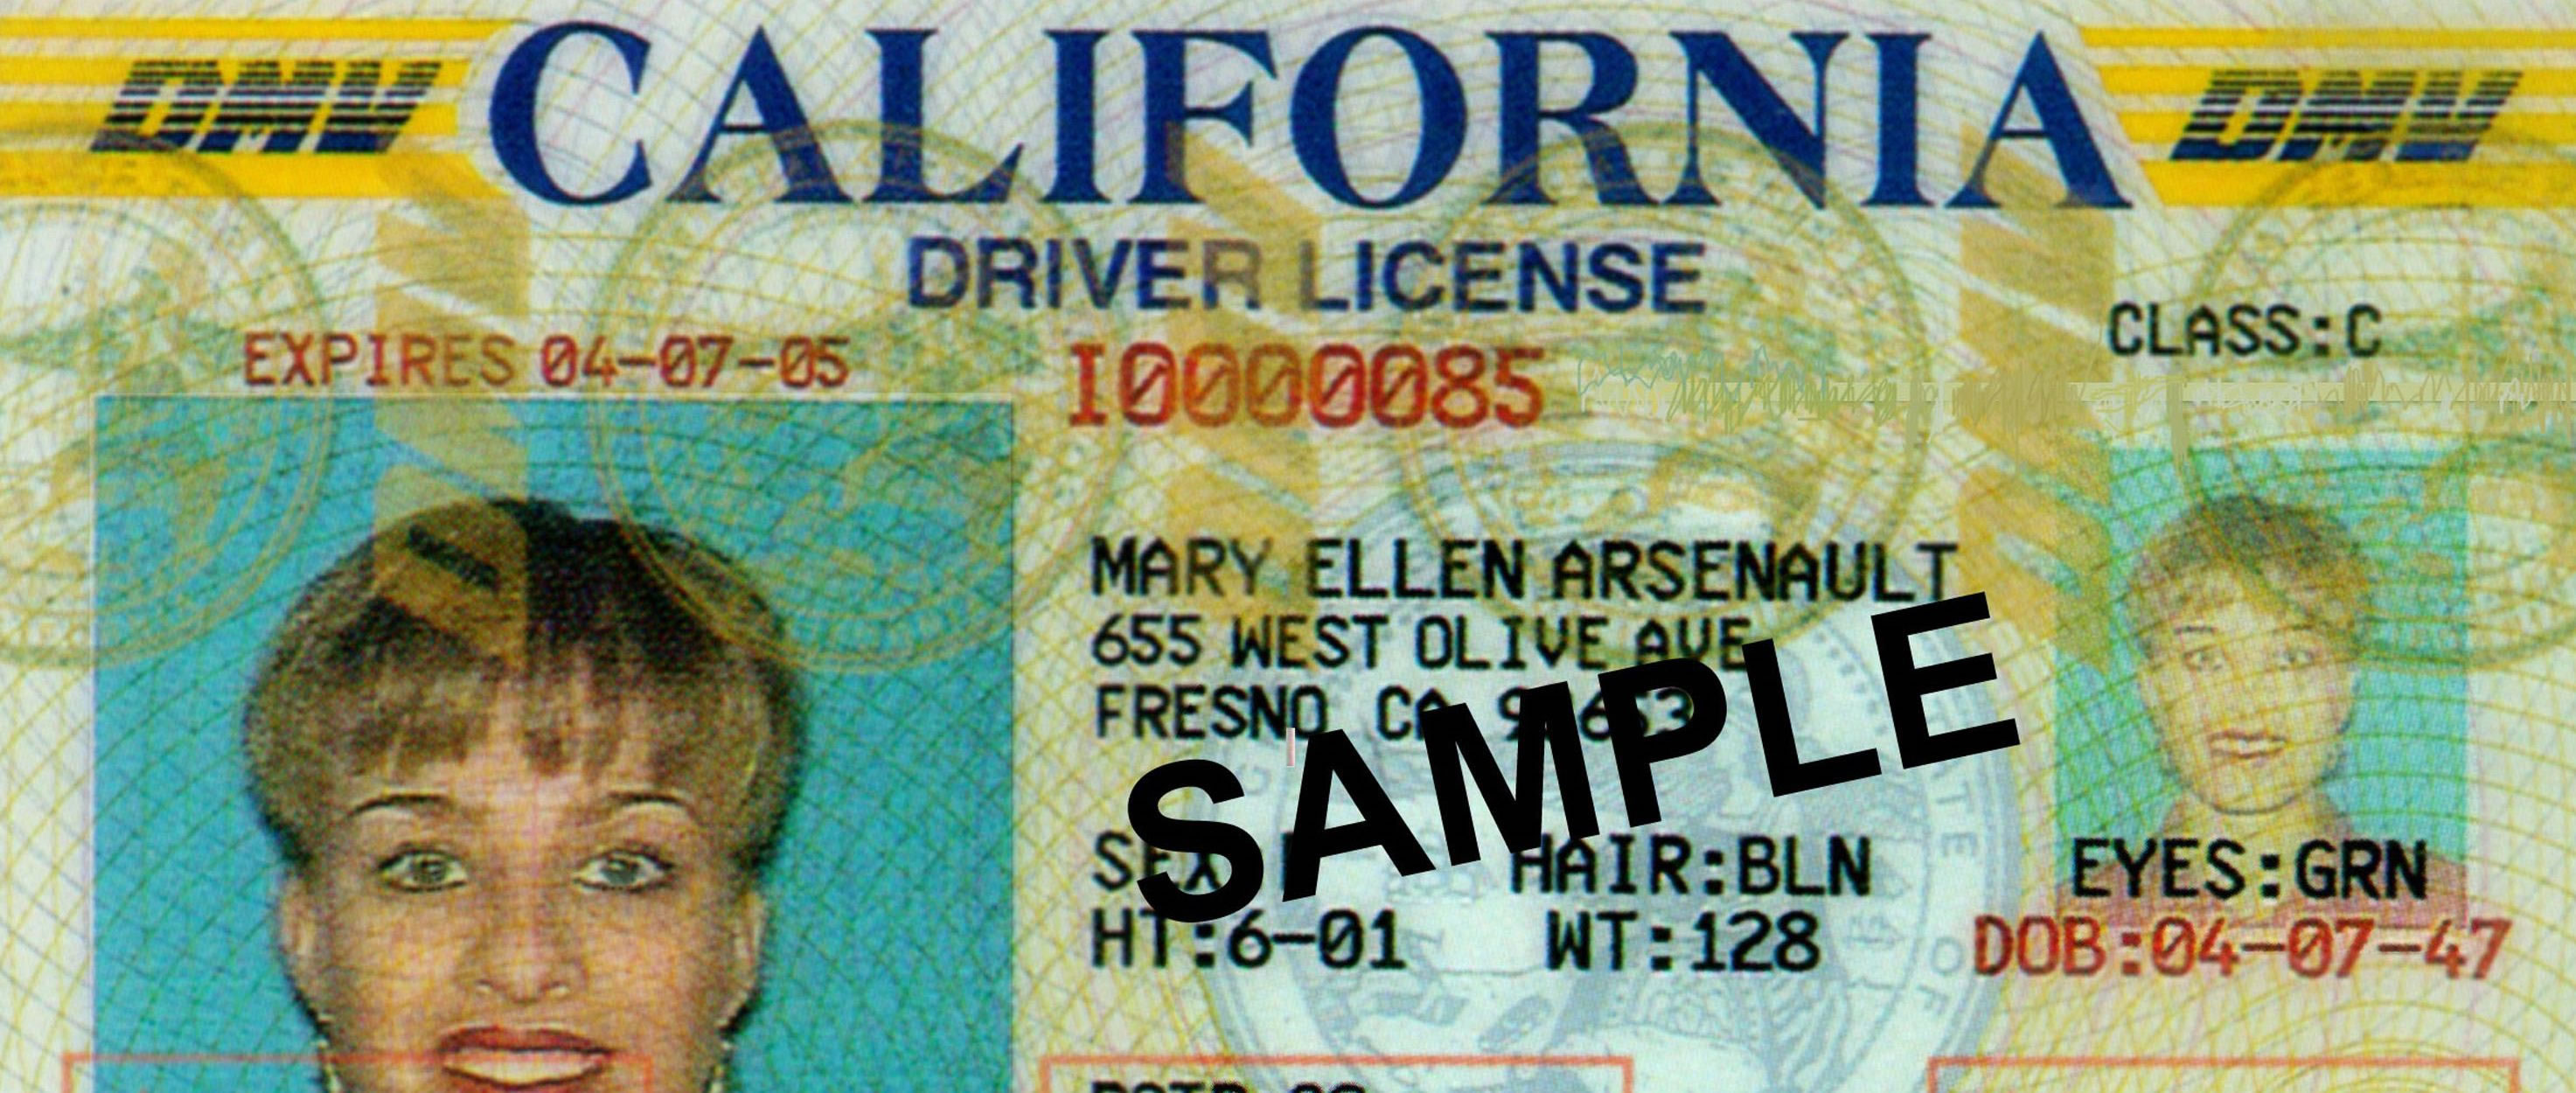 driver license endorsement type